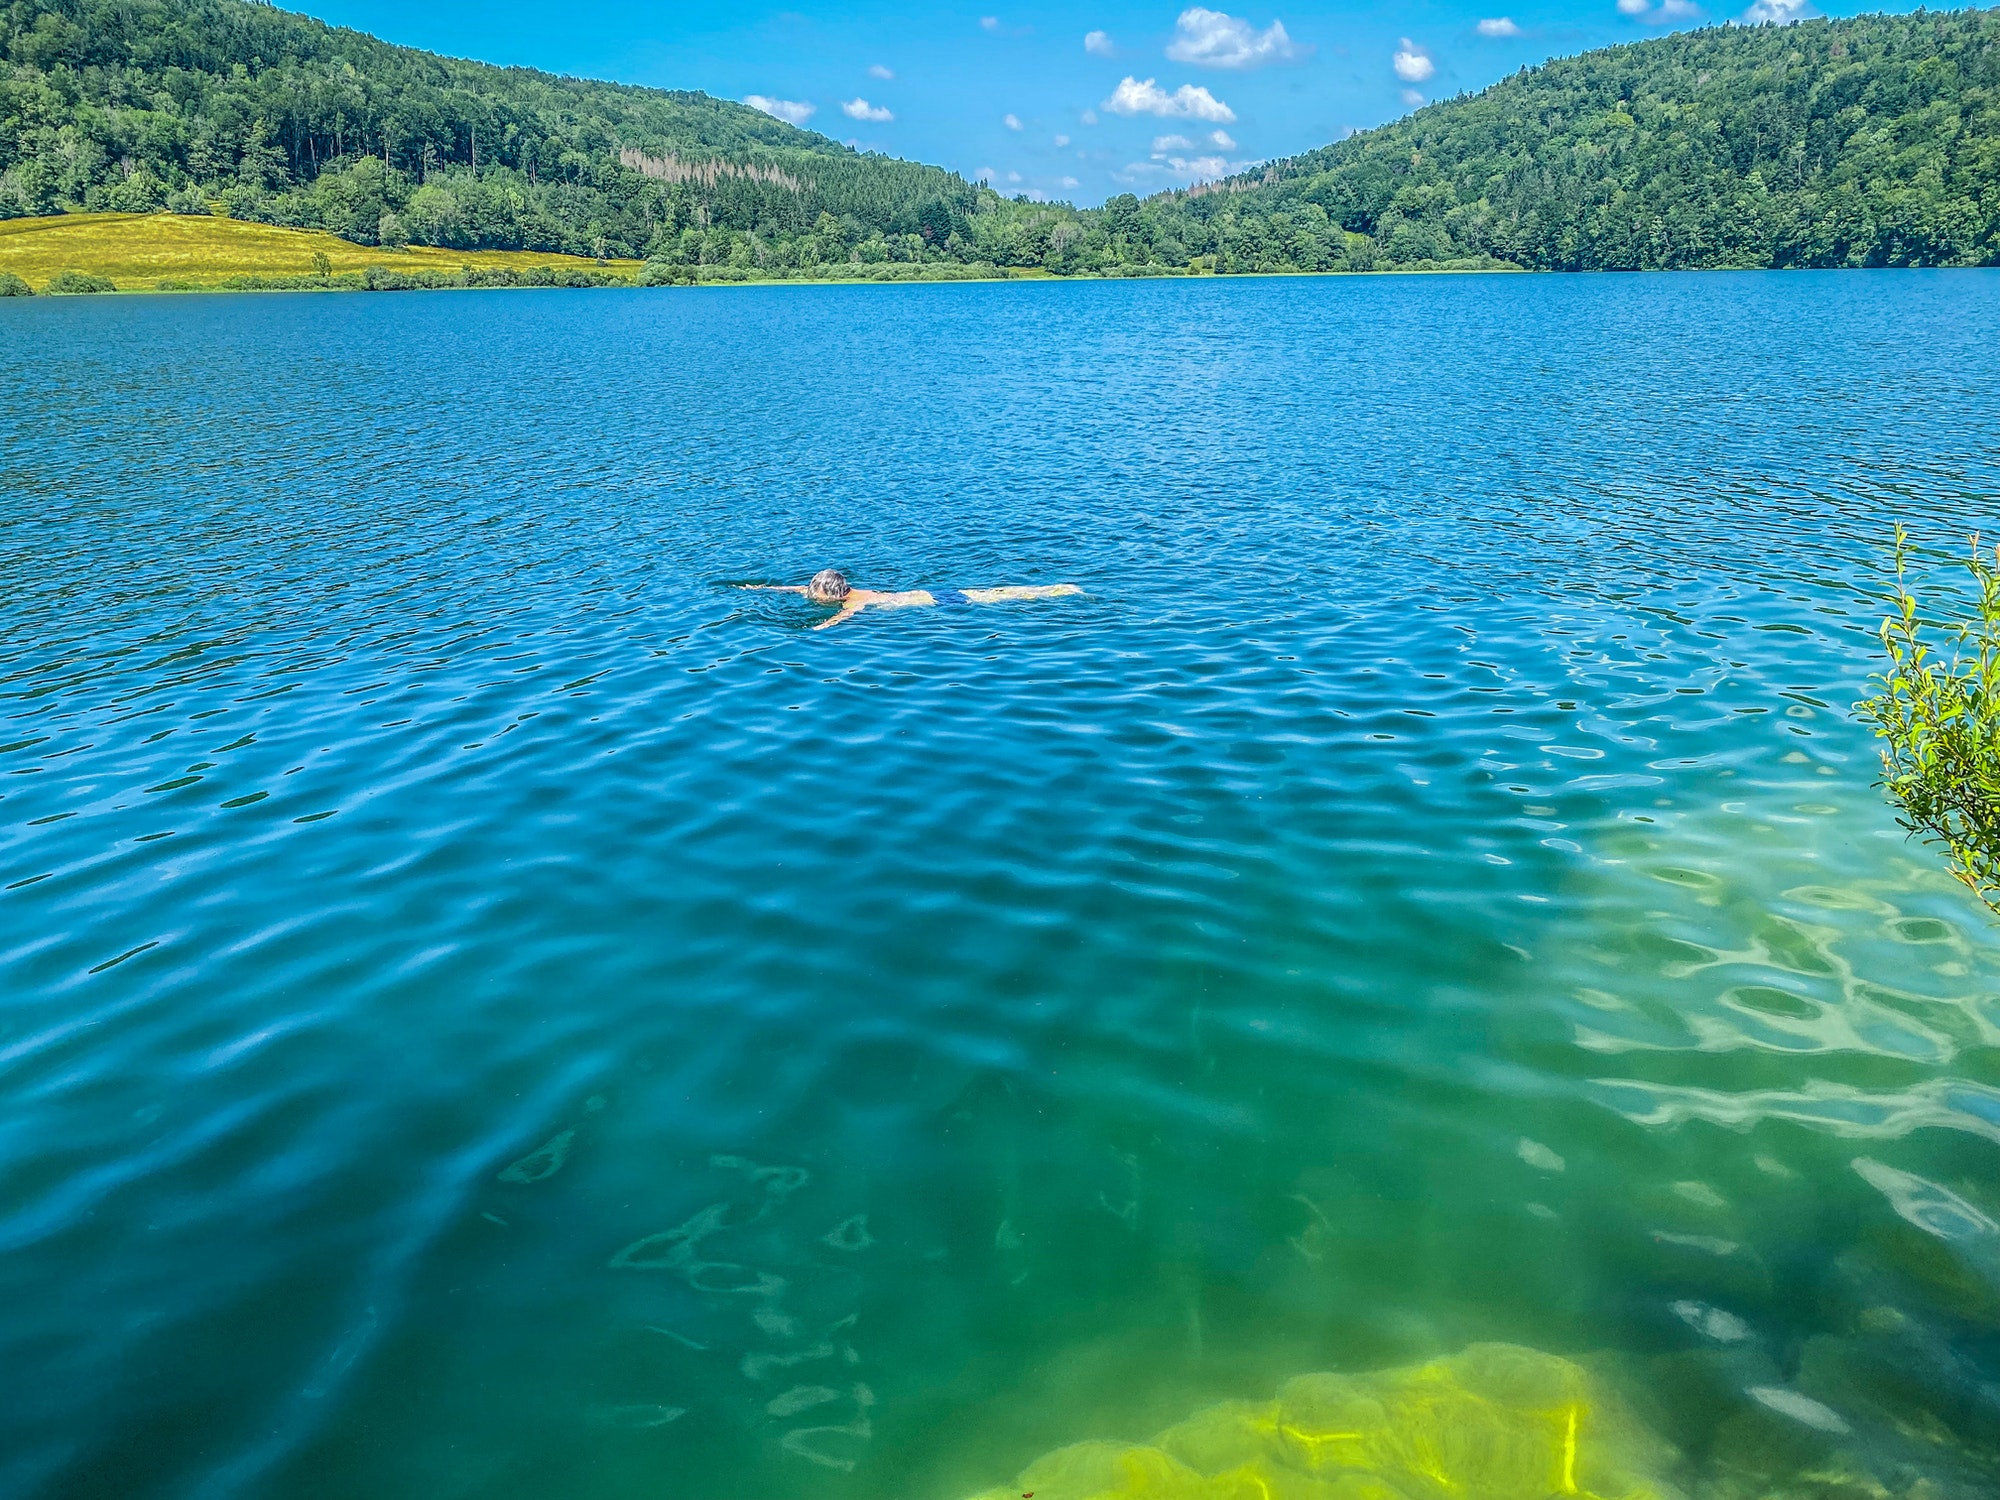 One unrecognizable person swim in the Narlay lake, Le Frasnois, Bourgogne-Franche-Comté, Jura